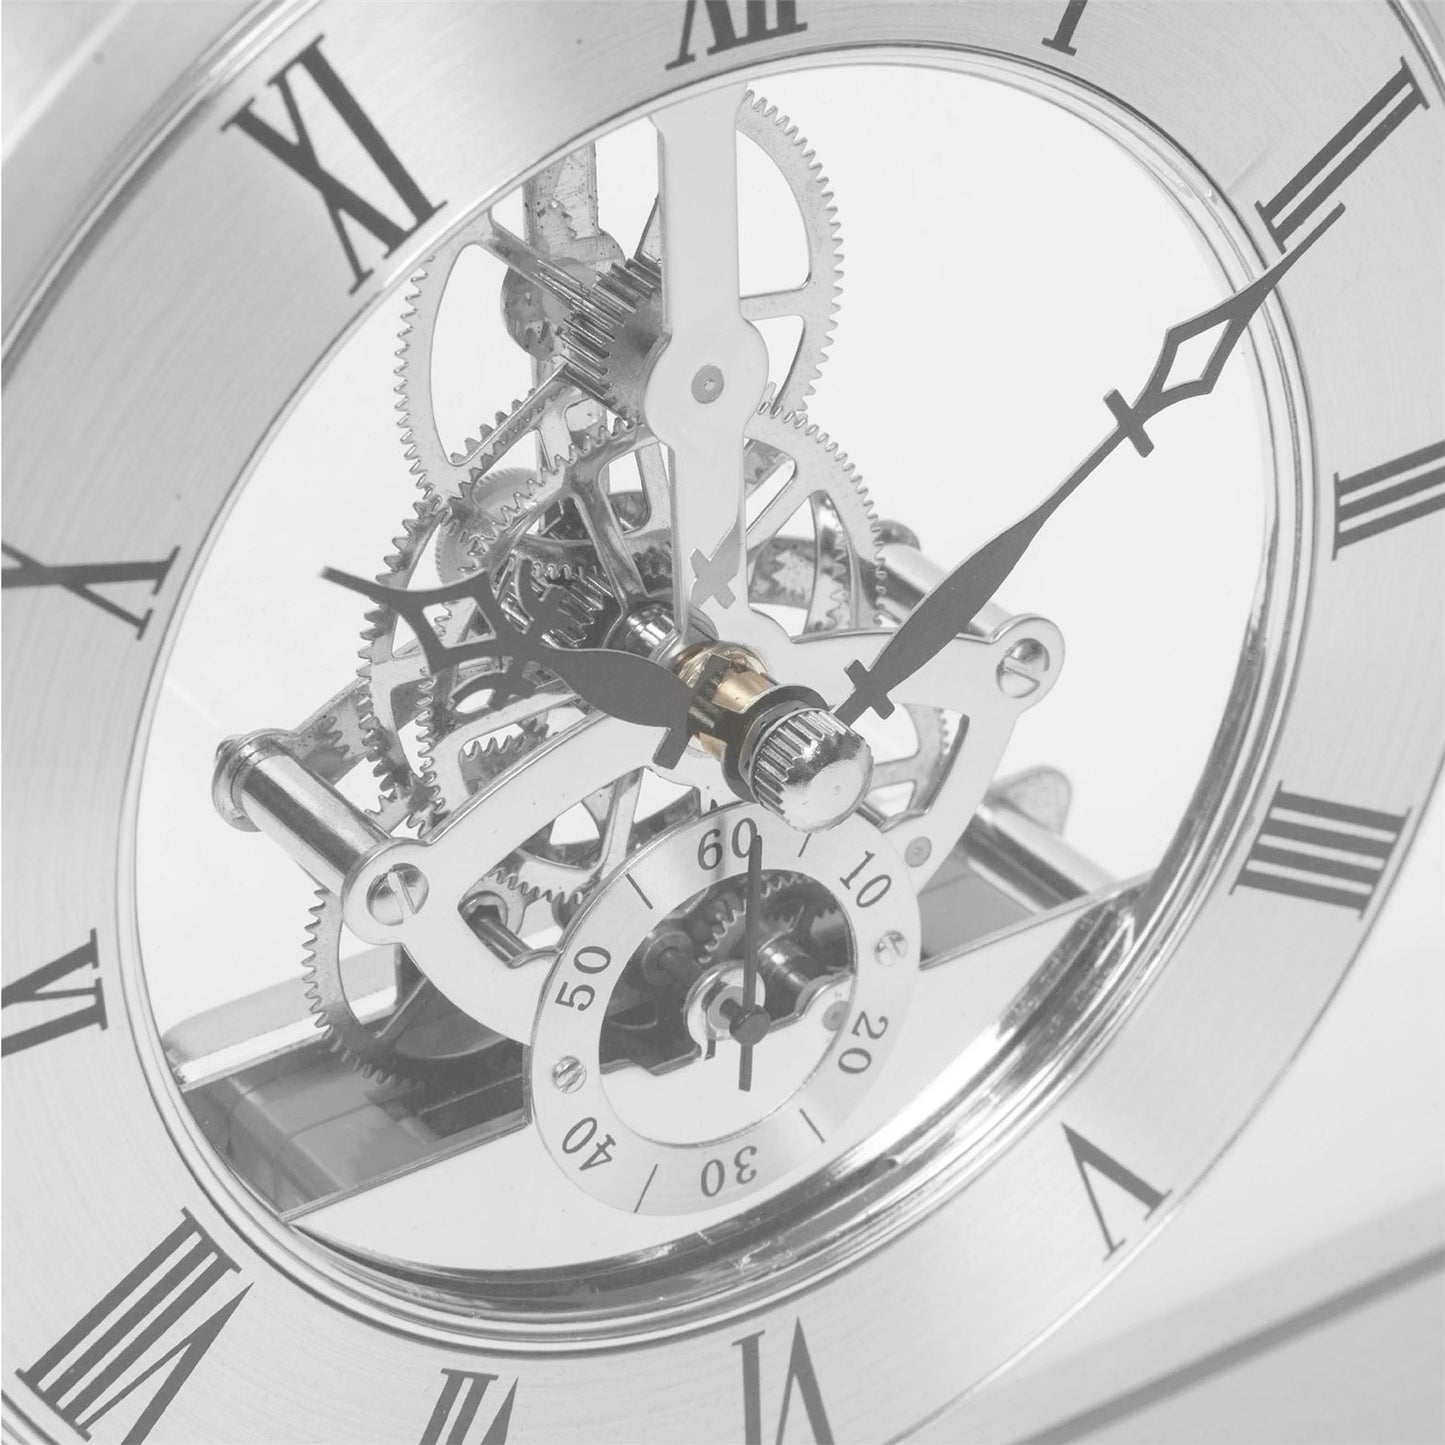 Wm.Widdop Napoleon Mantel Clock Gold Skeleton Movement W2854 Available Multiple Colour